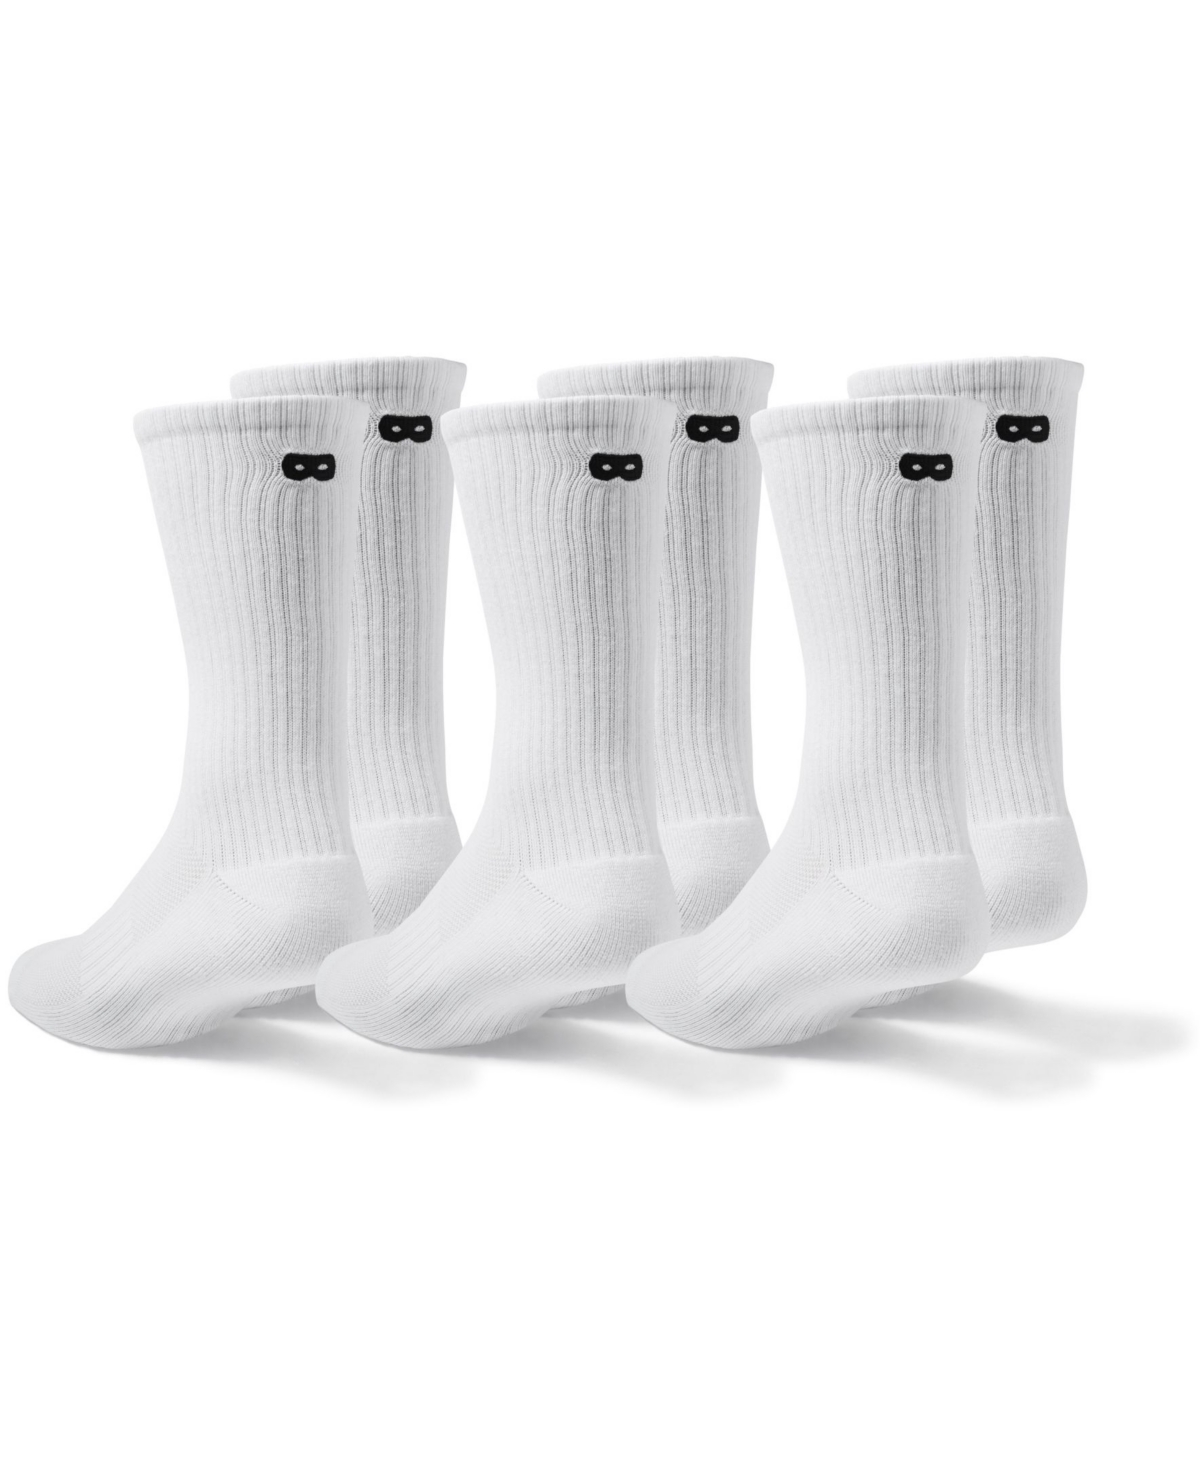 Pair Of Thieves Men's Cushion Crew Socks, Pack Of 3 In White/black